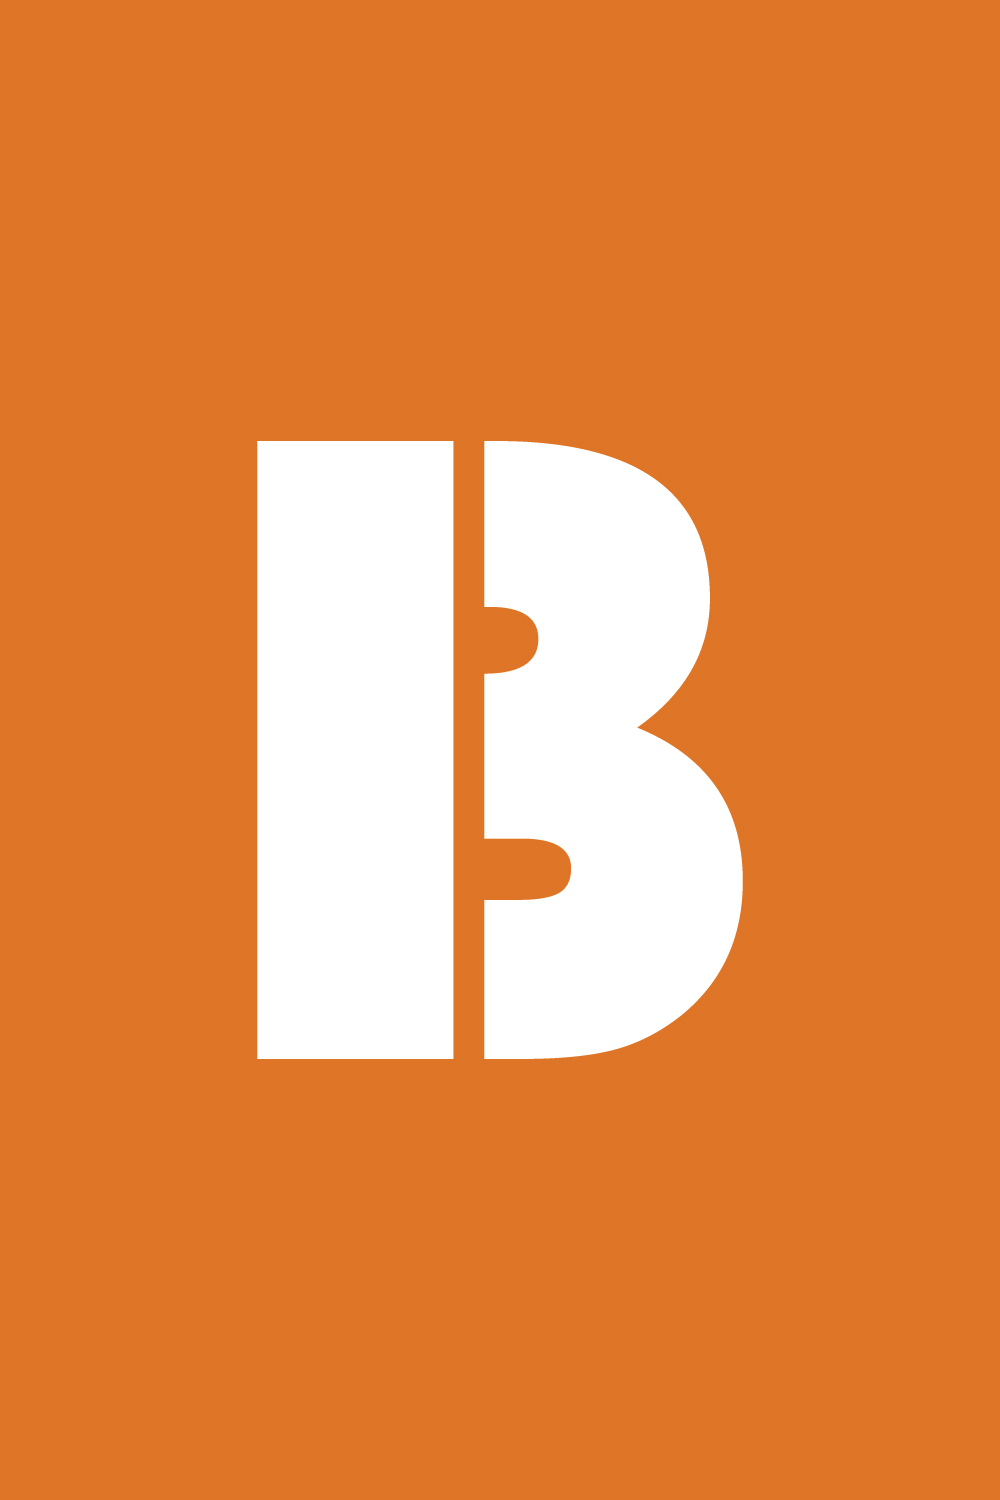 B Logo Design Template Pinterest image.